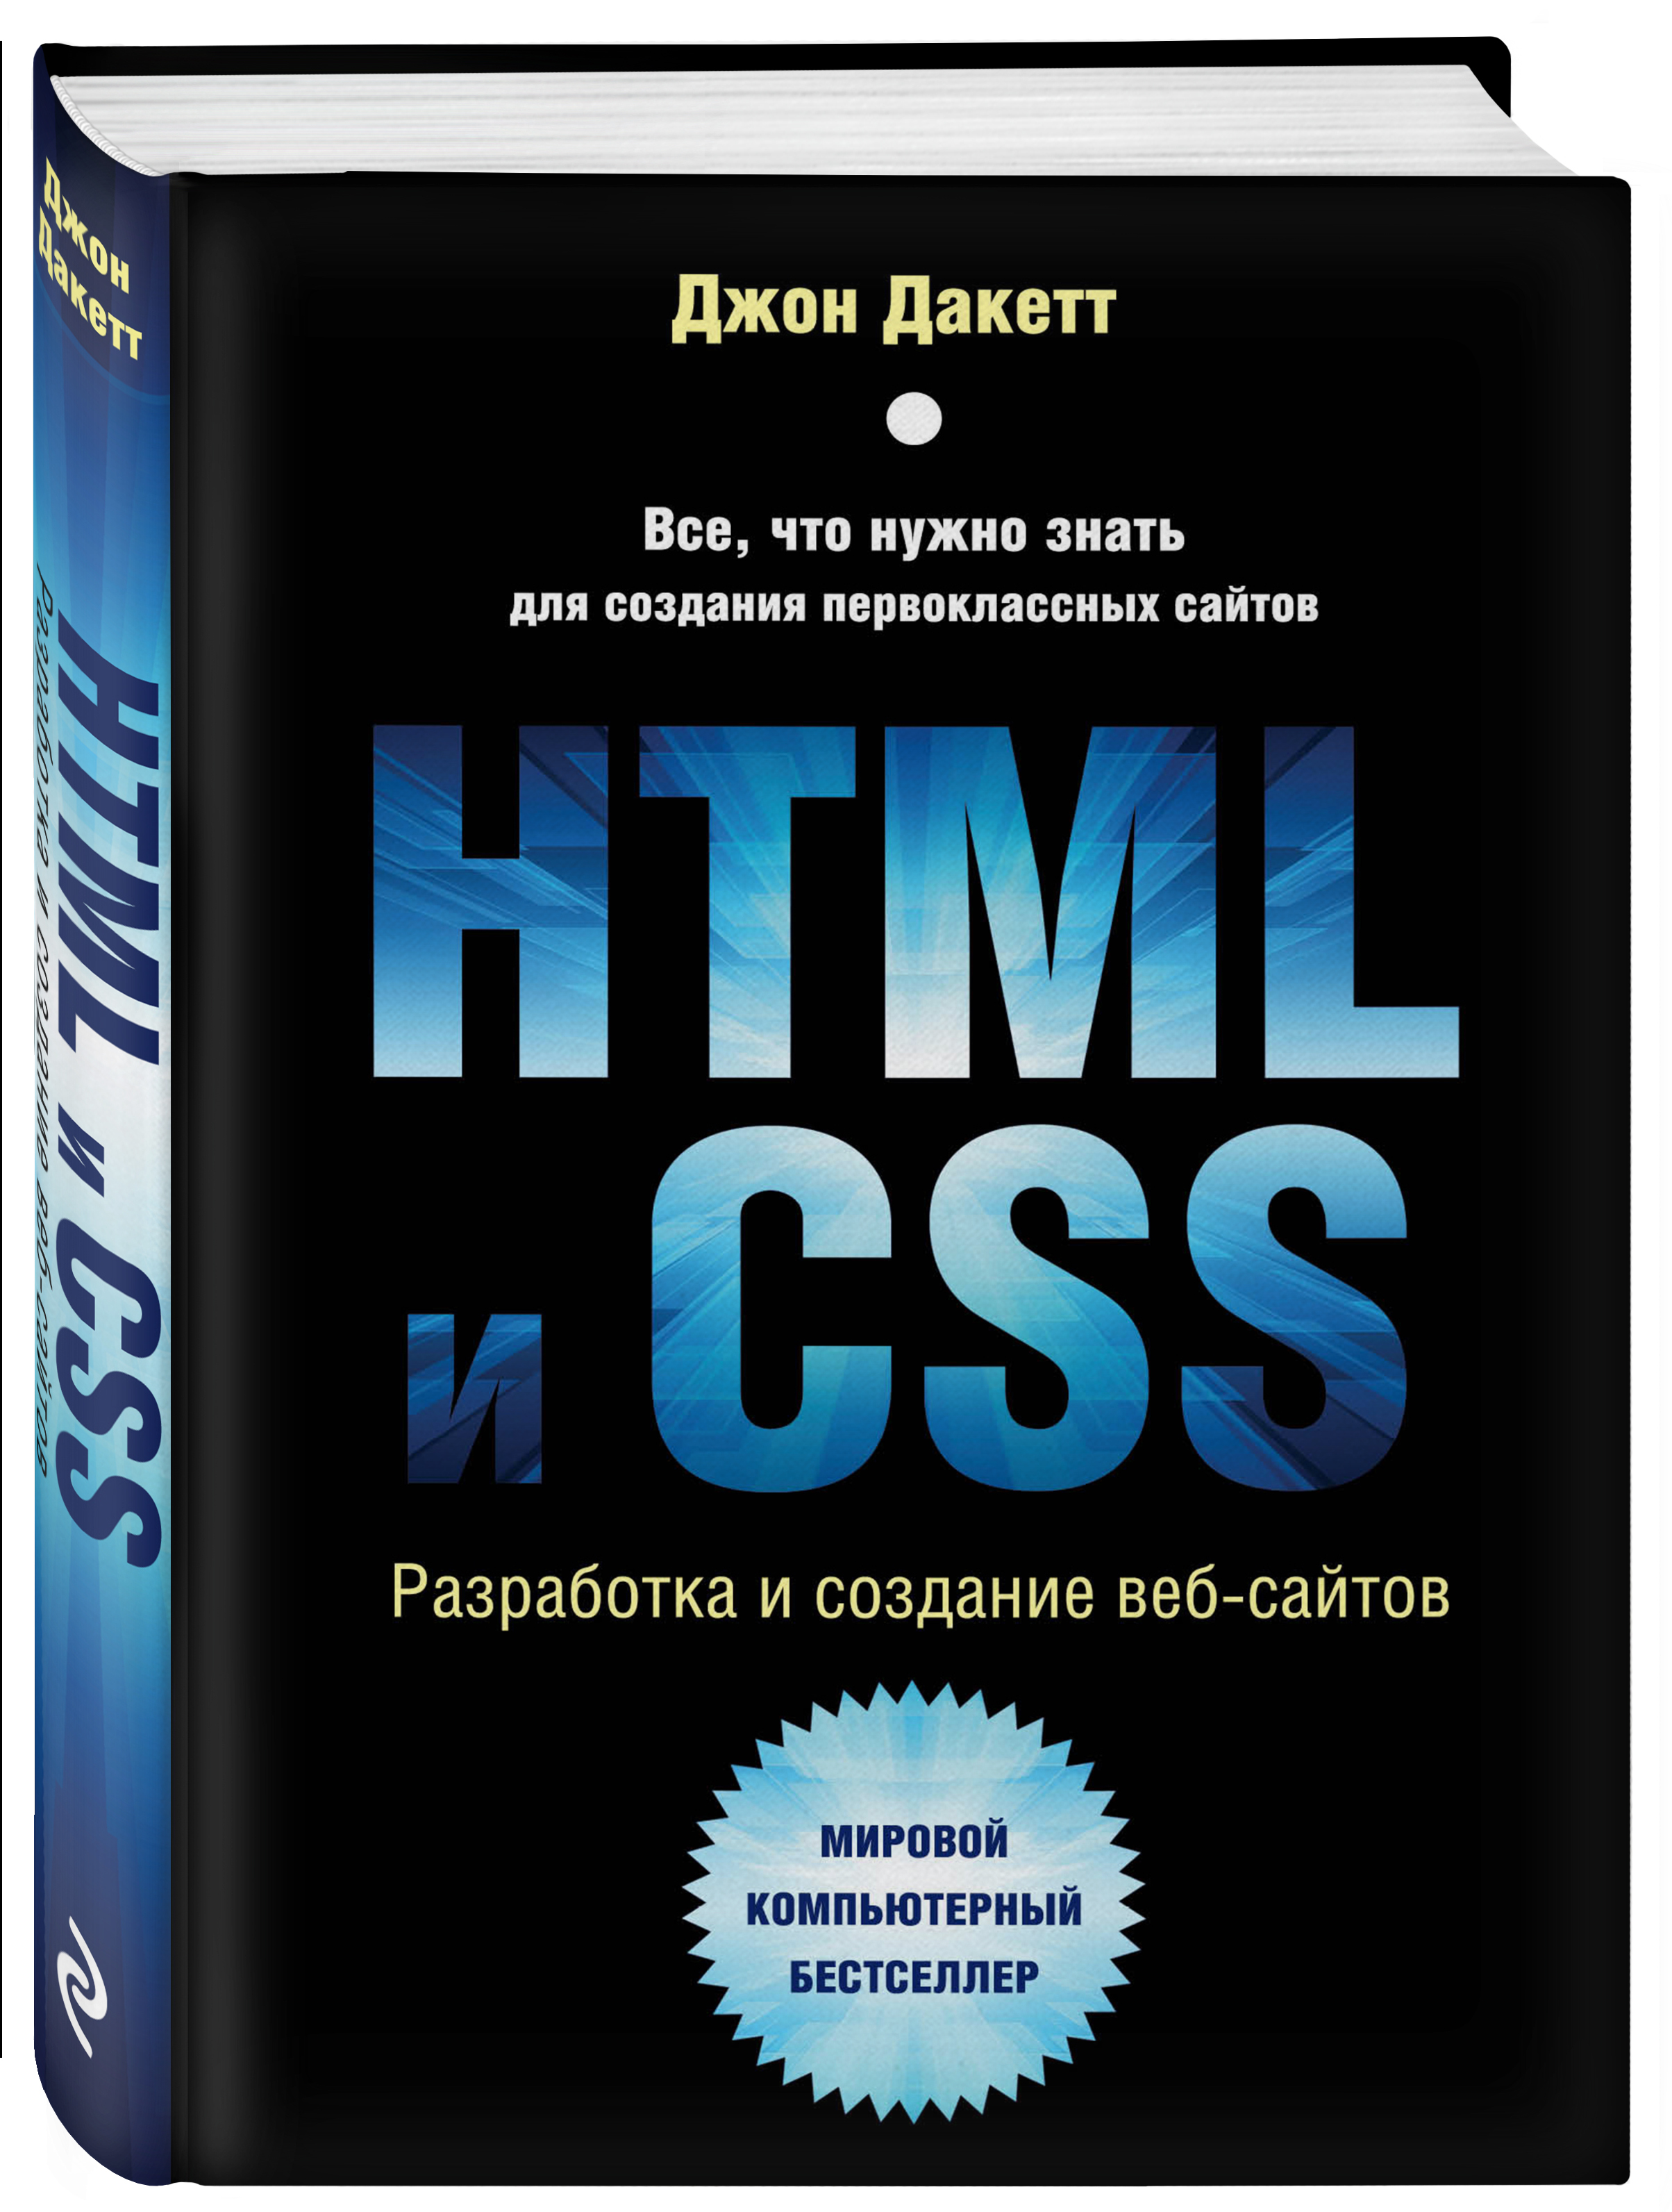 Книги про программирование. Джон Дакетт html и CSS. Книга html Джон Дакетт. Html CSS книга. Книги по html и CSS.